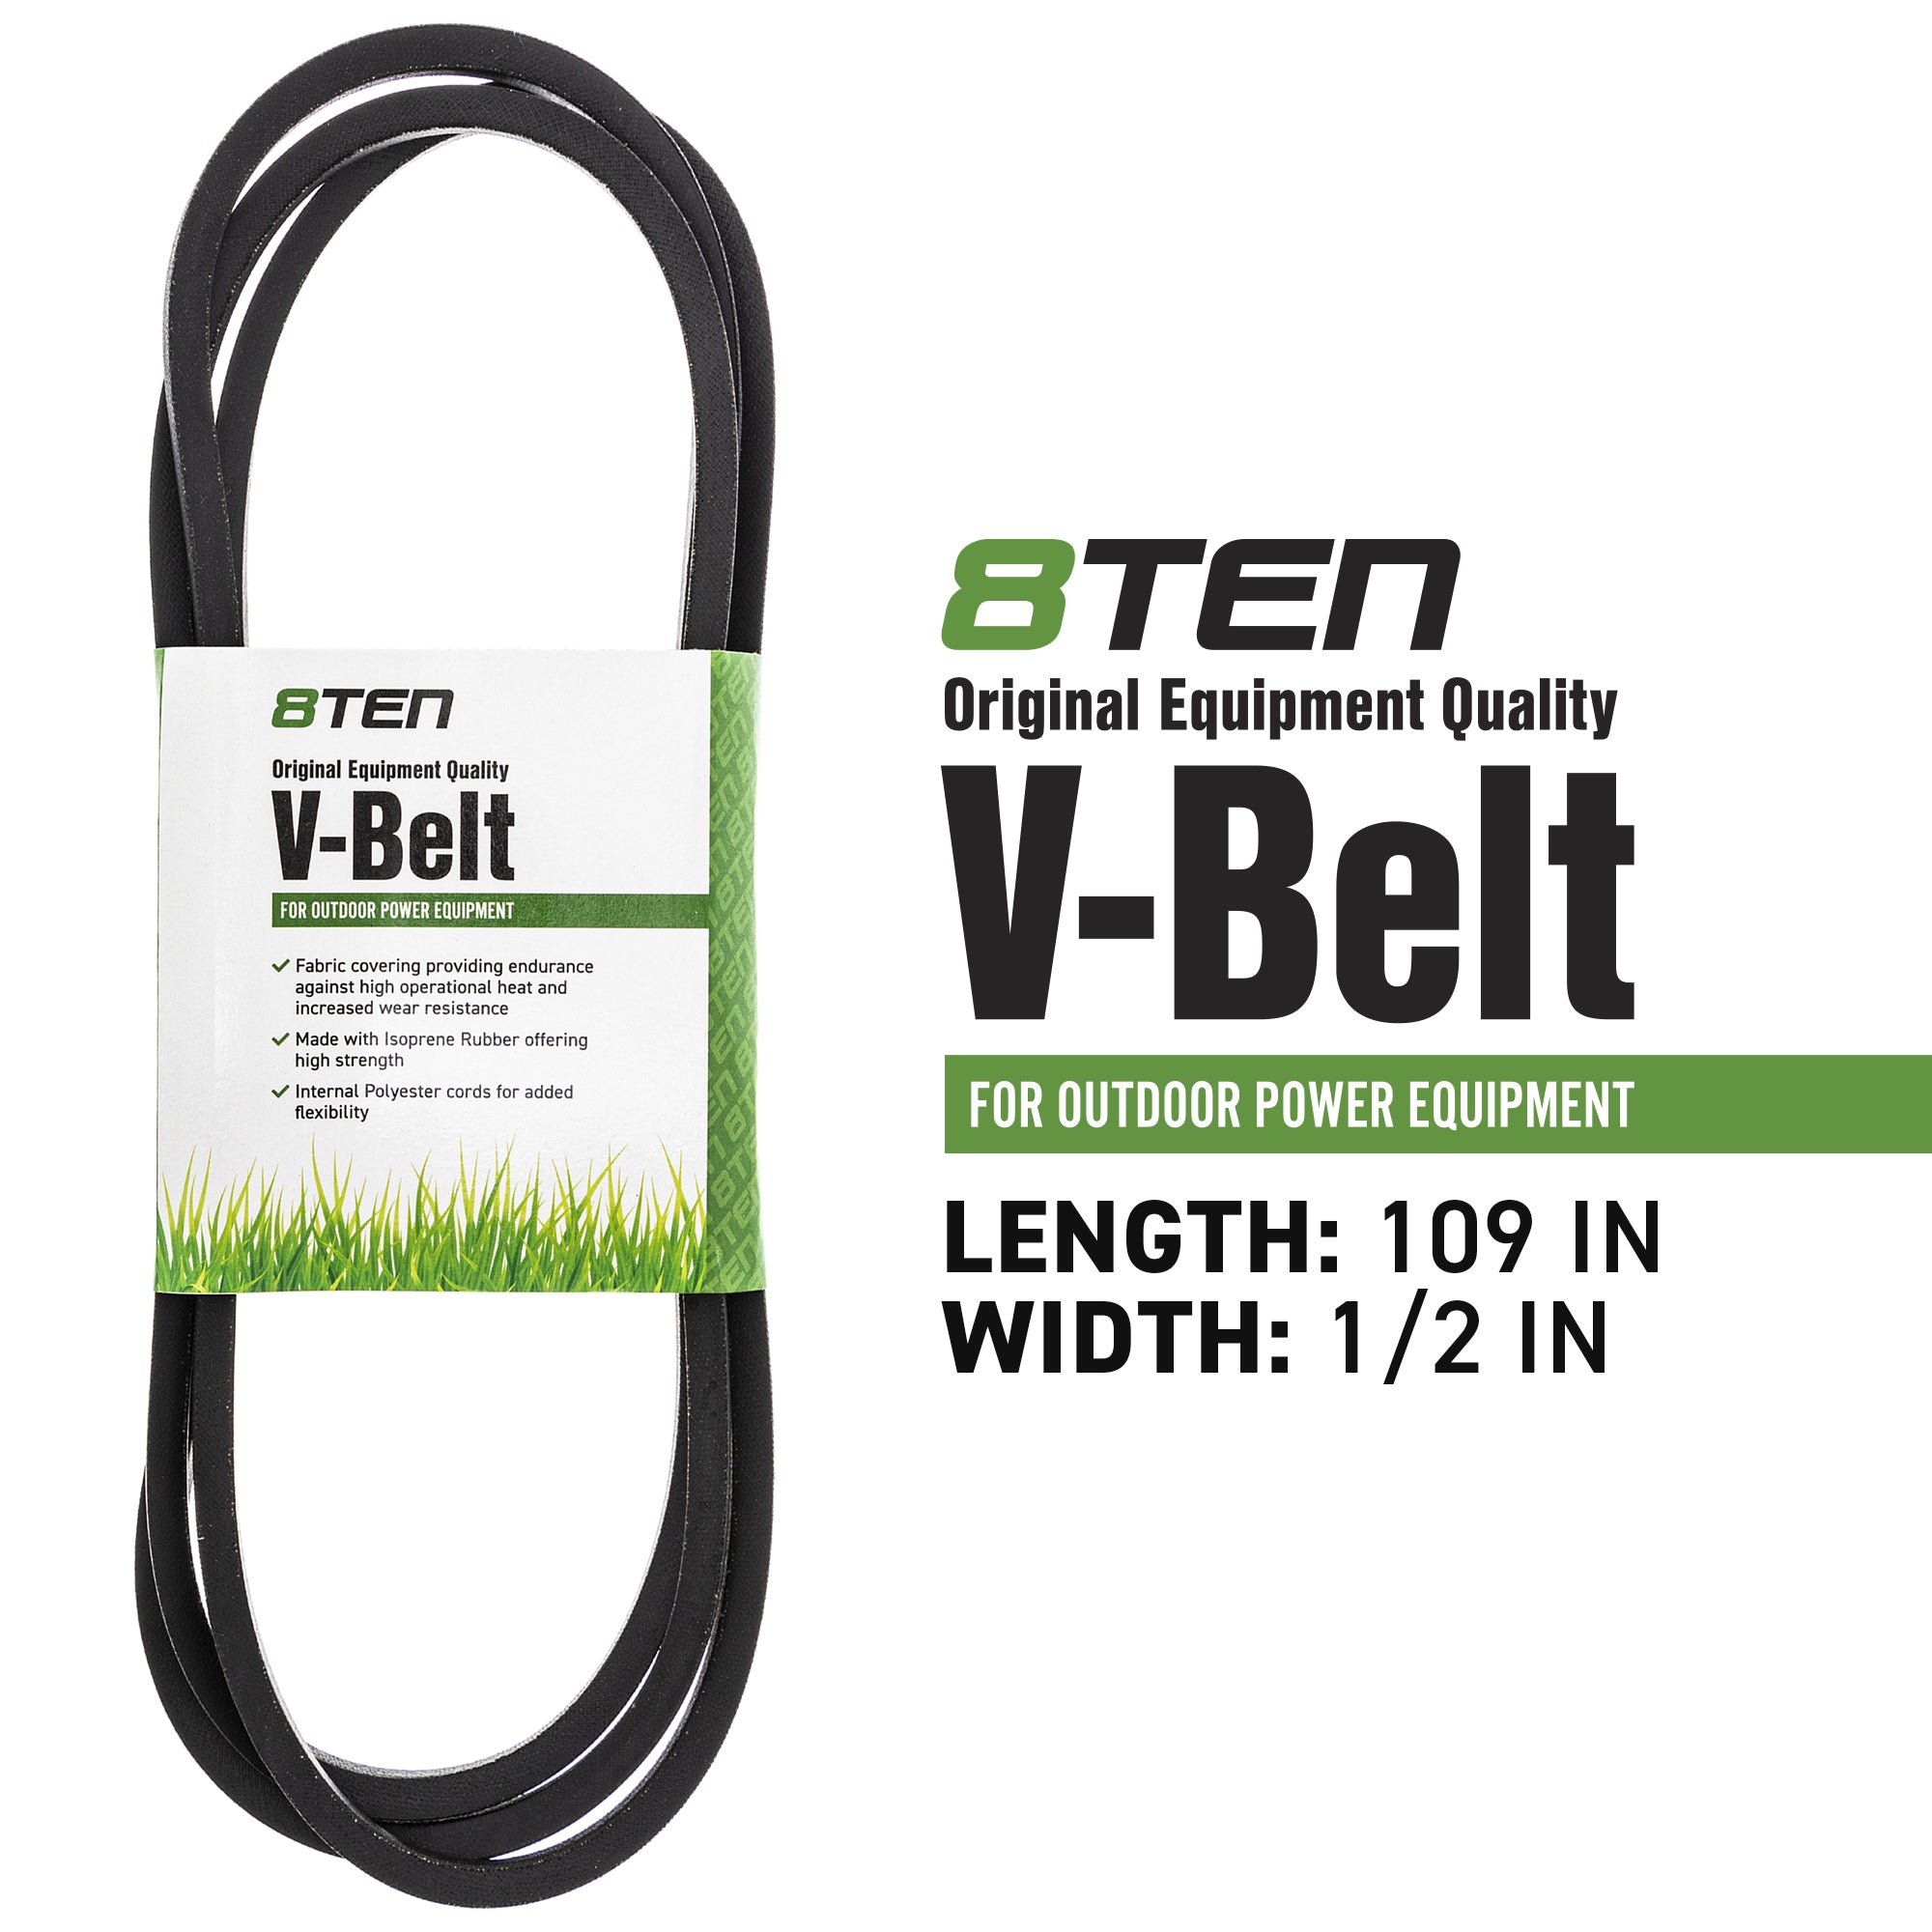 8TEN MK1006353 Clutch Belt Kit for Xtreme Warner Stens Oregon MTD